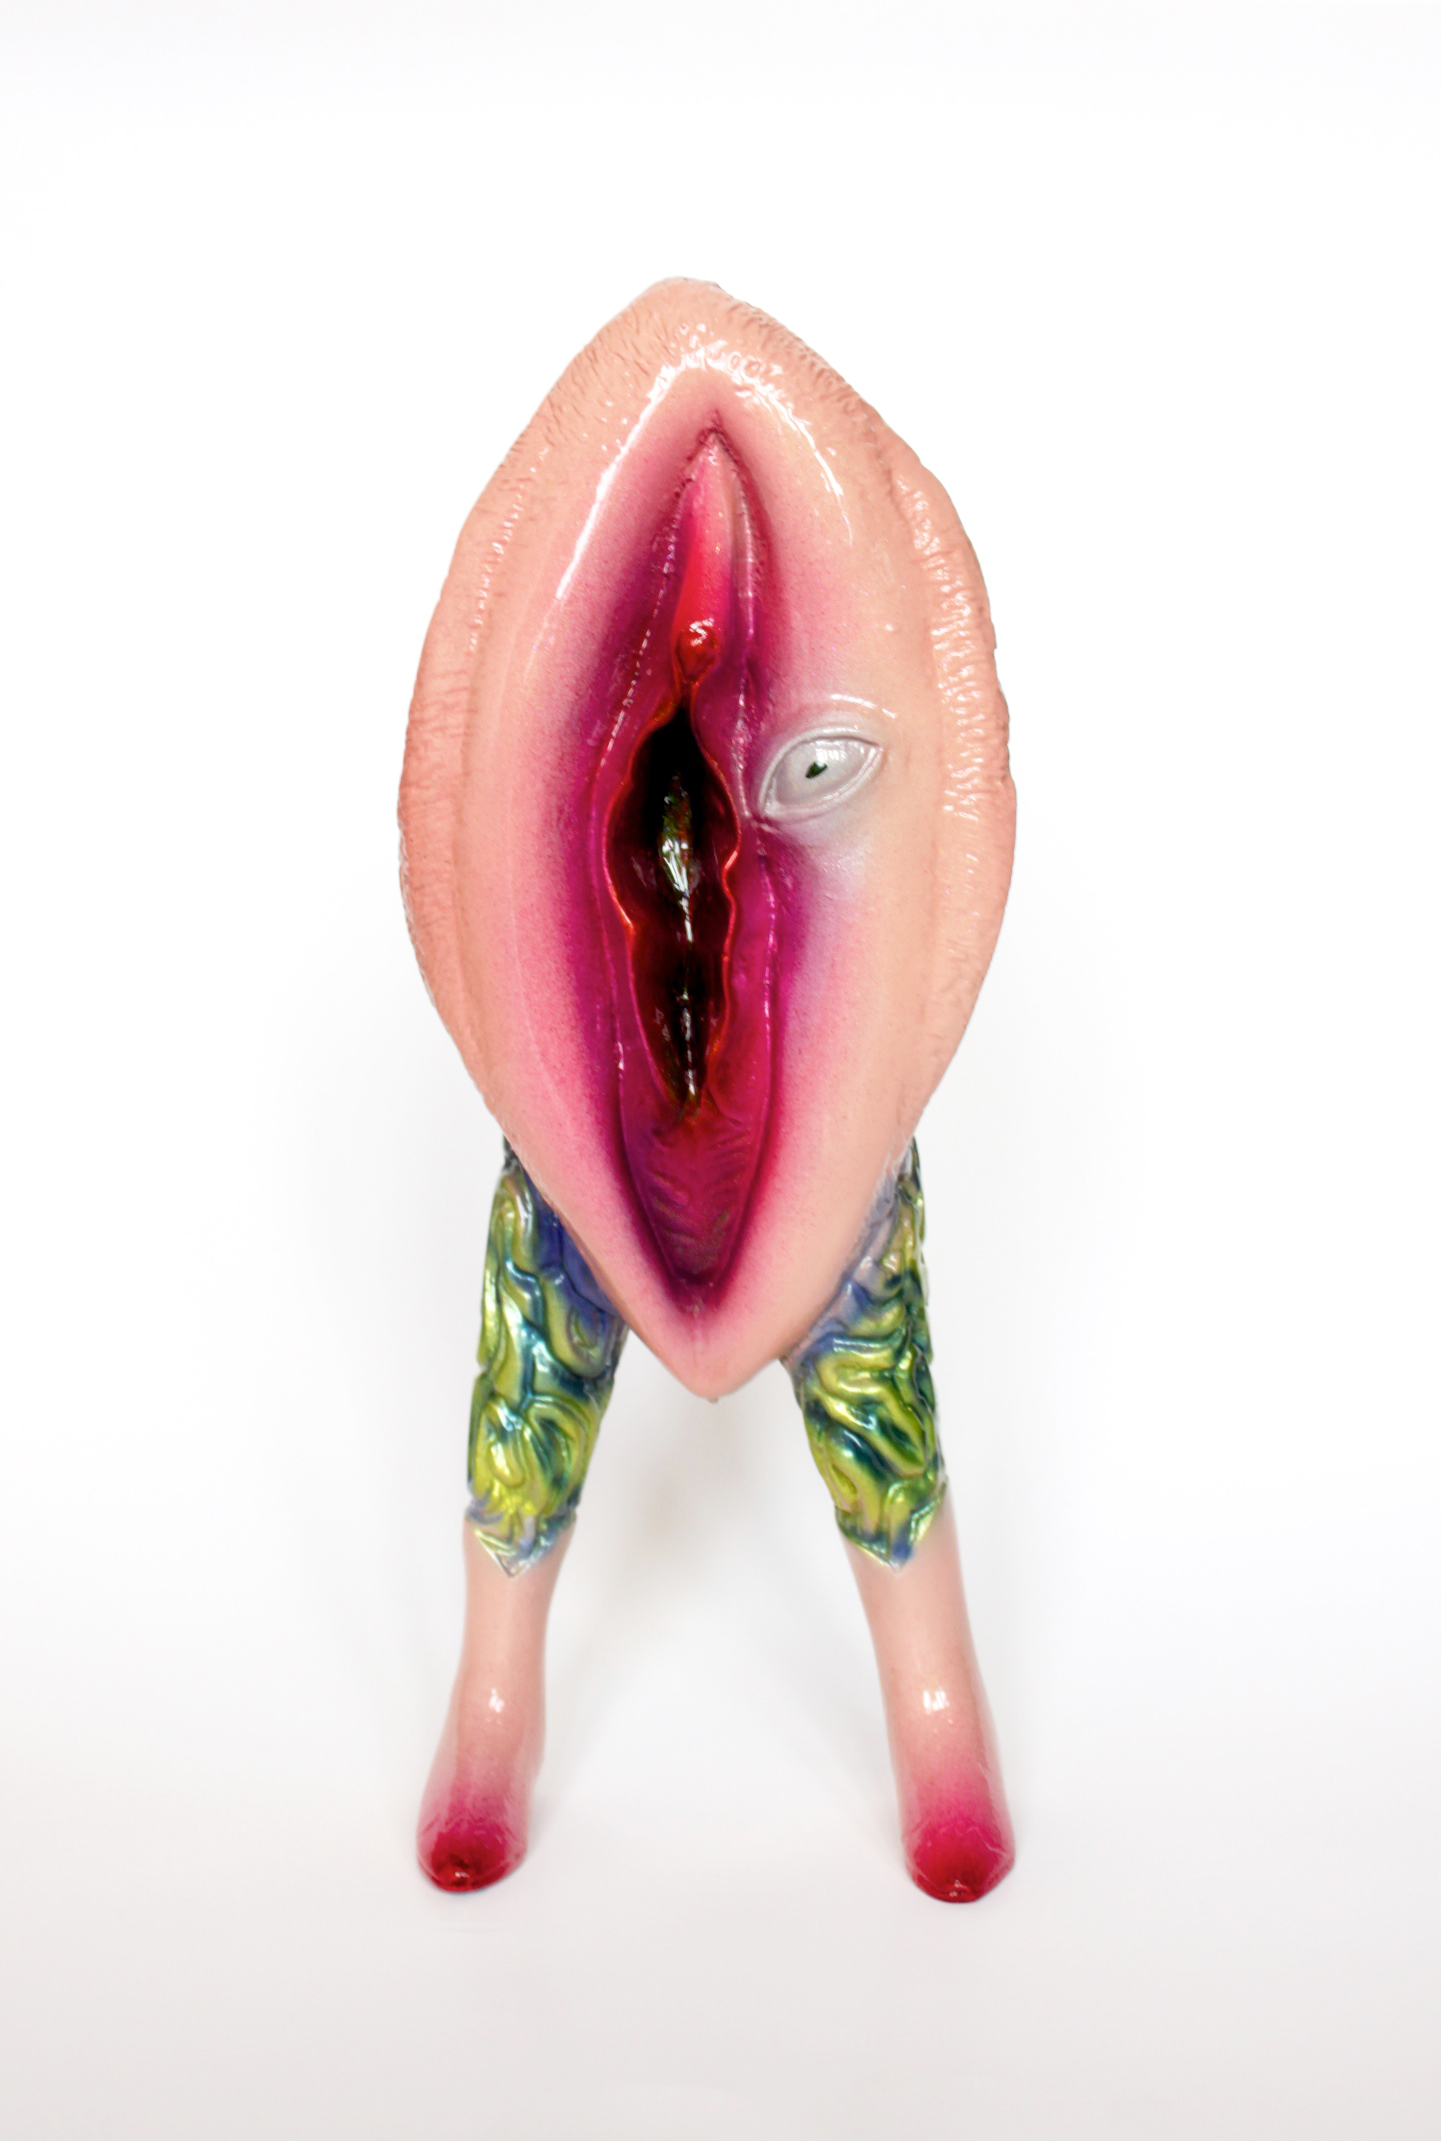 Vagina Brain Monster (Flesh Version)